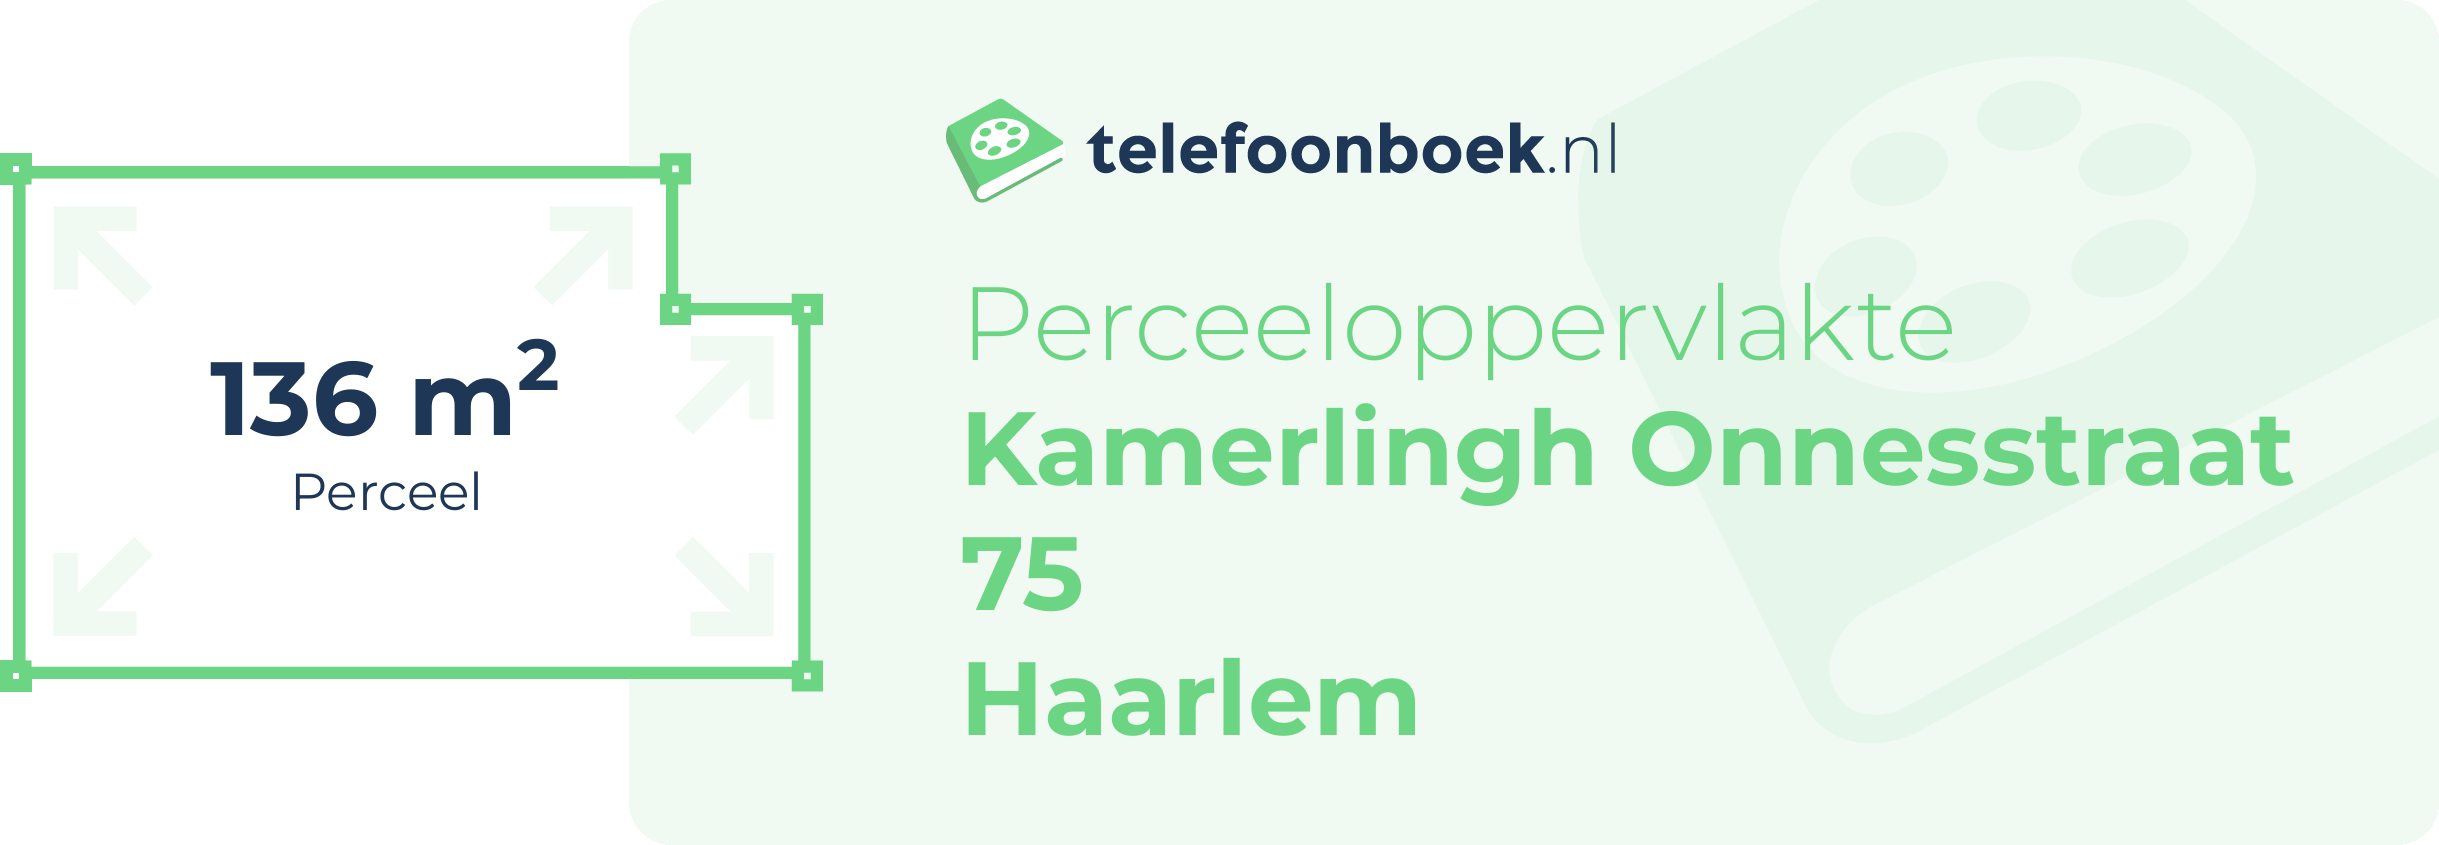 Perceeloppervlakte Kamerlingh Onnesstraat 75 Haarlem